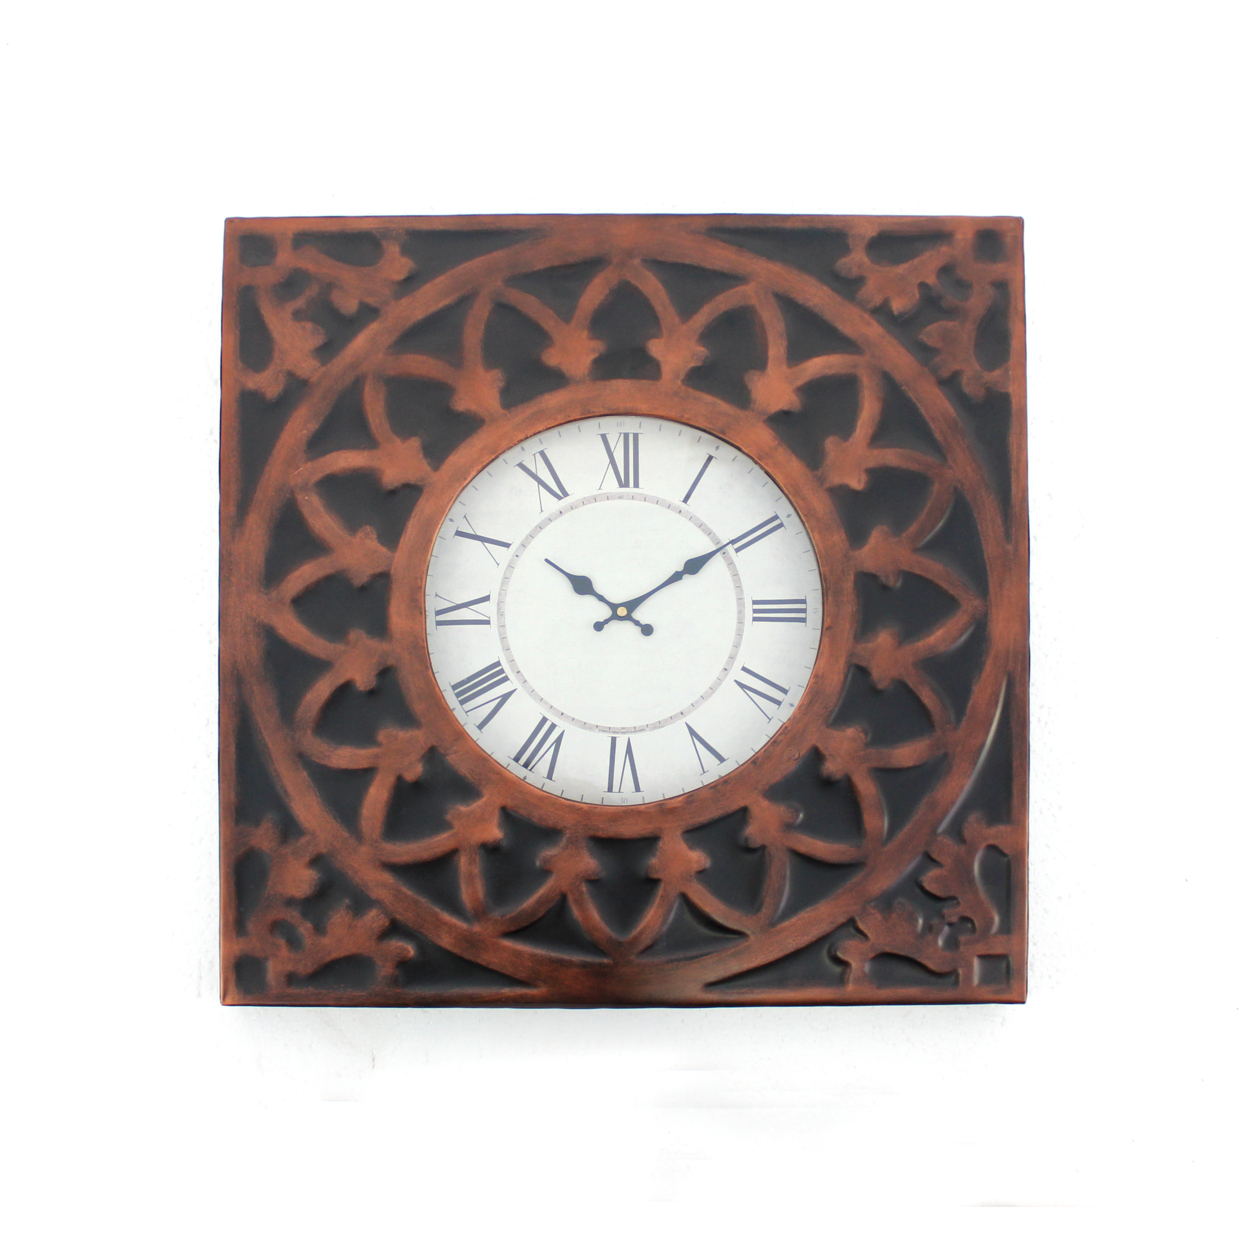 Baroque Design Metal Wall Clock With Roman Numerals, Brown And Black- Saltoro Sherpi